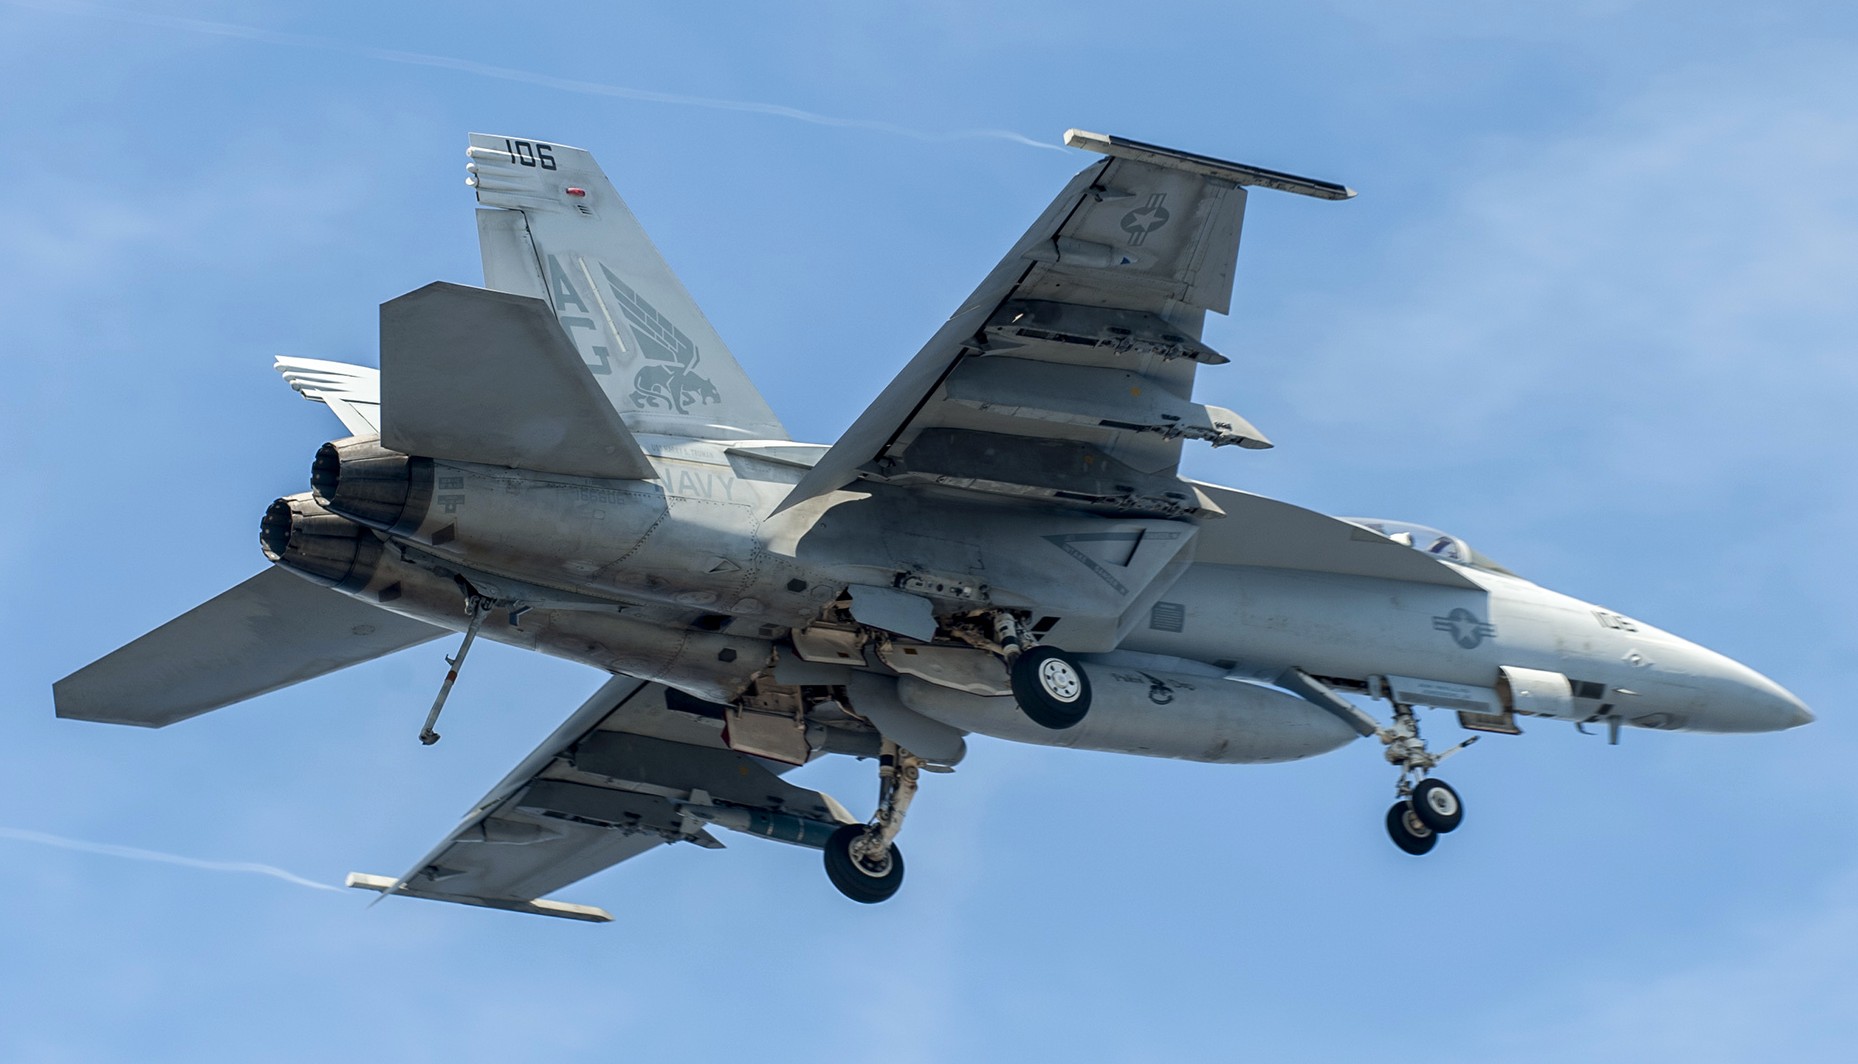 vfa-143 pukin dogs strike fighter squadron f/a-18e super hornet us navy nas oceana virginia